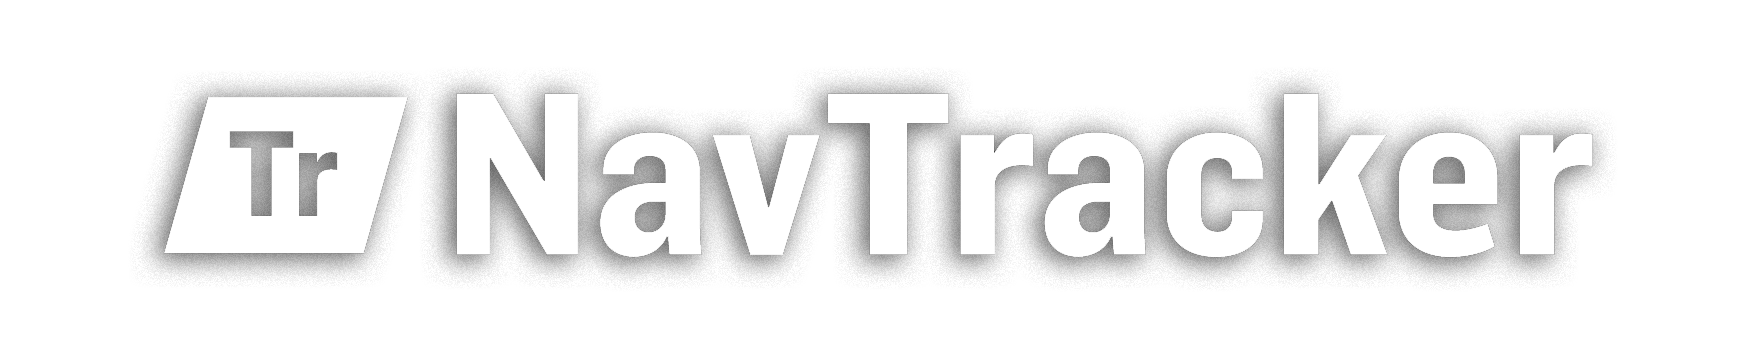 NavTracker logo